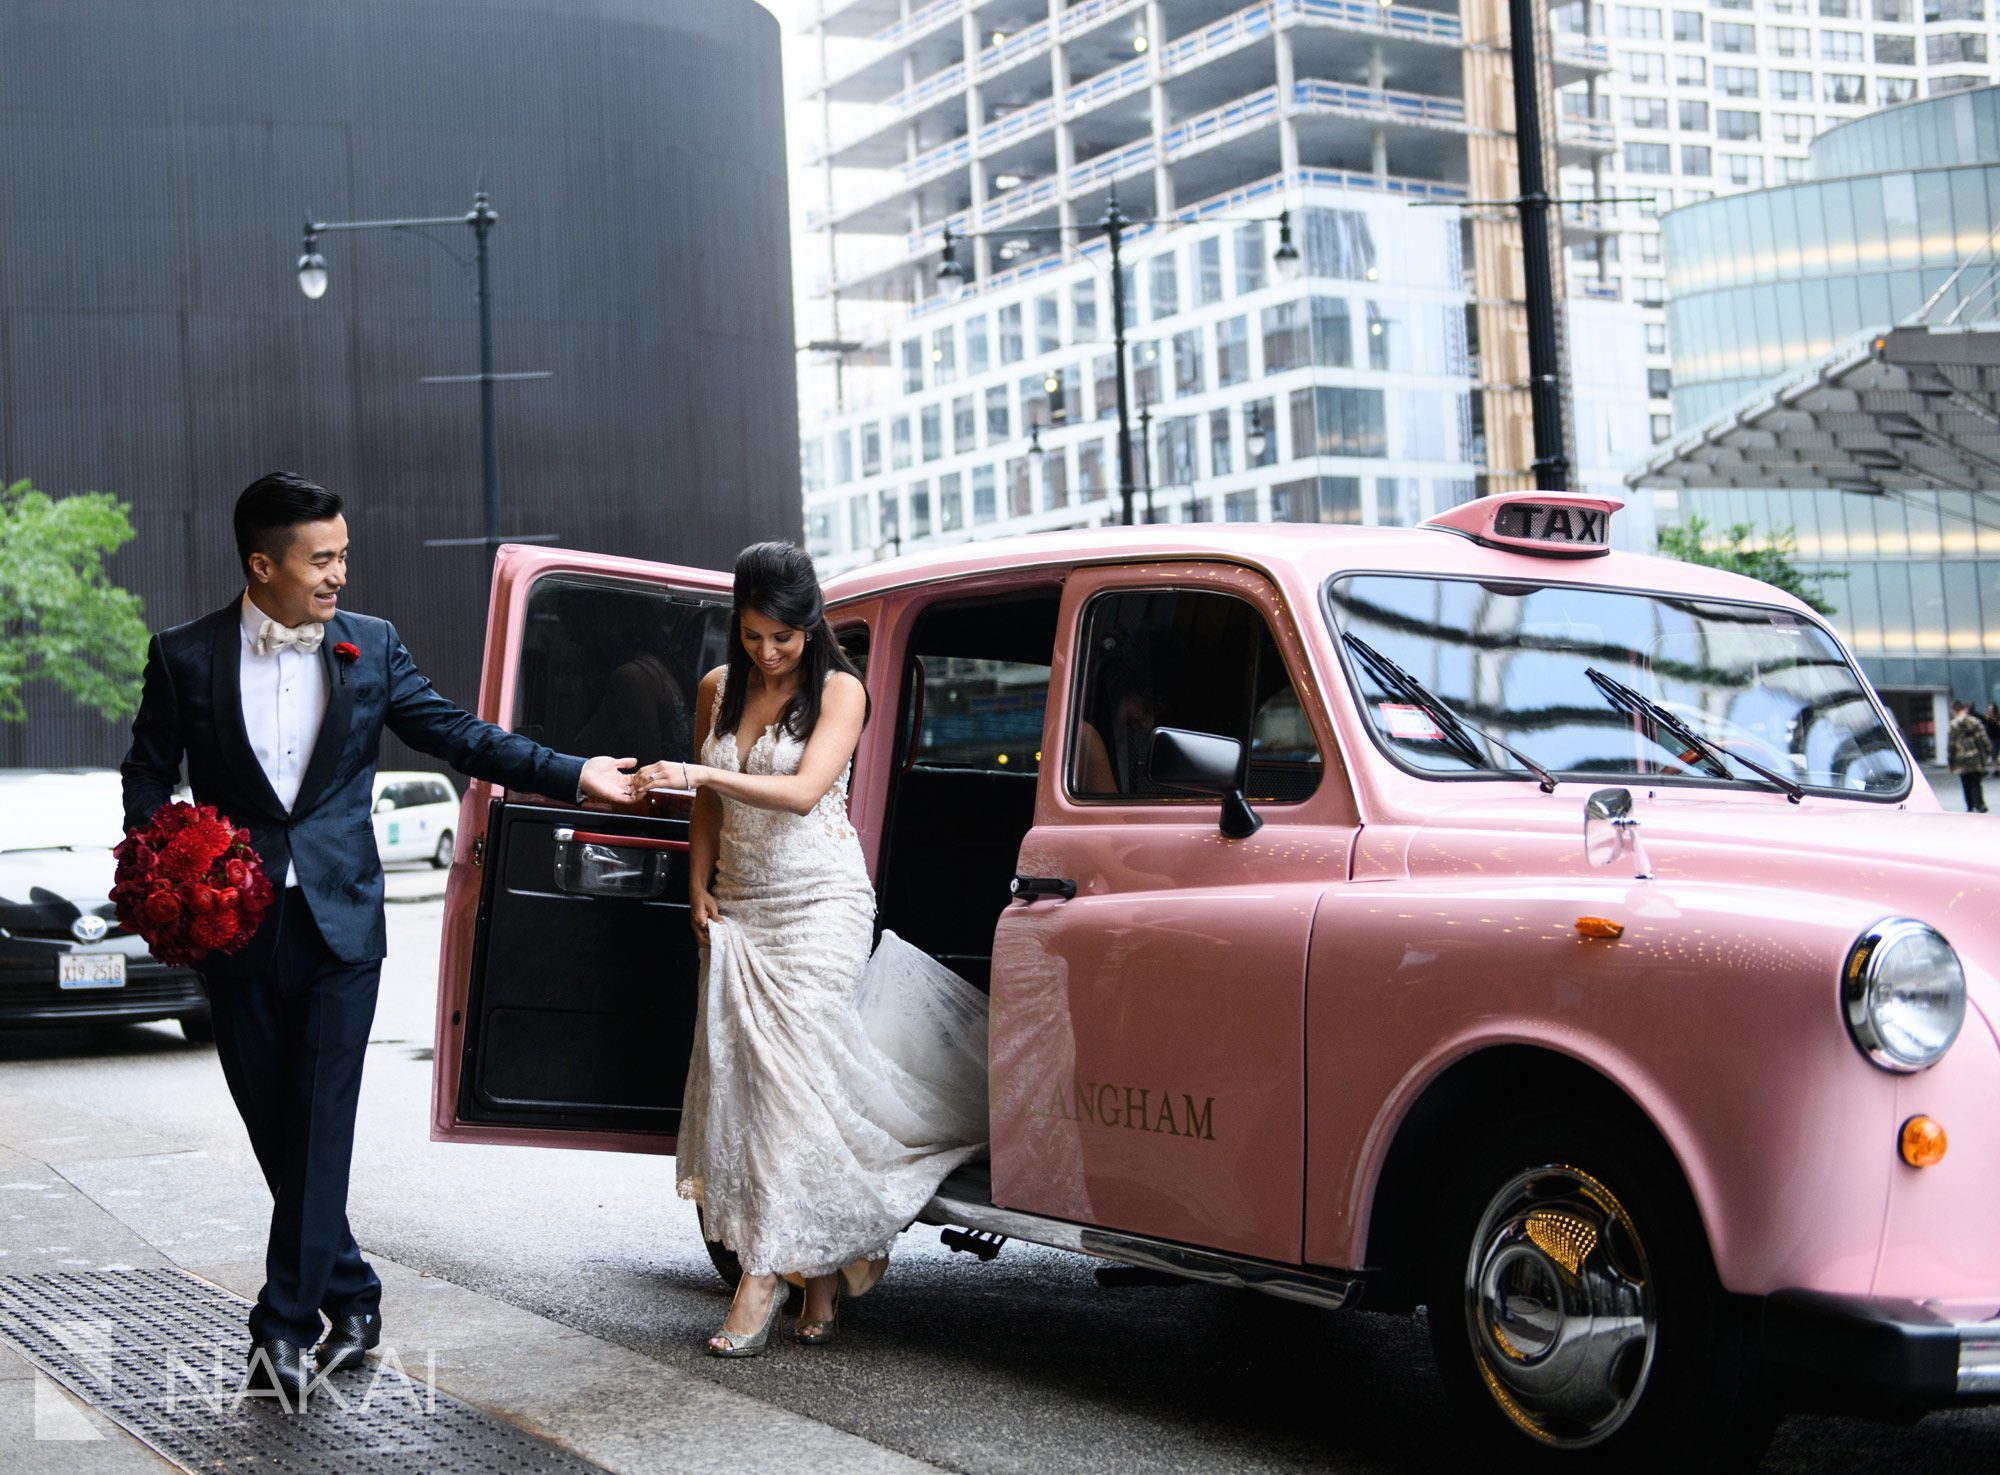 langham chicago wedding photo pink taxi bride groom 